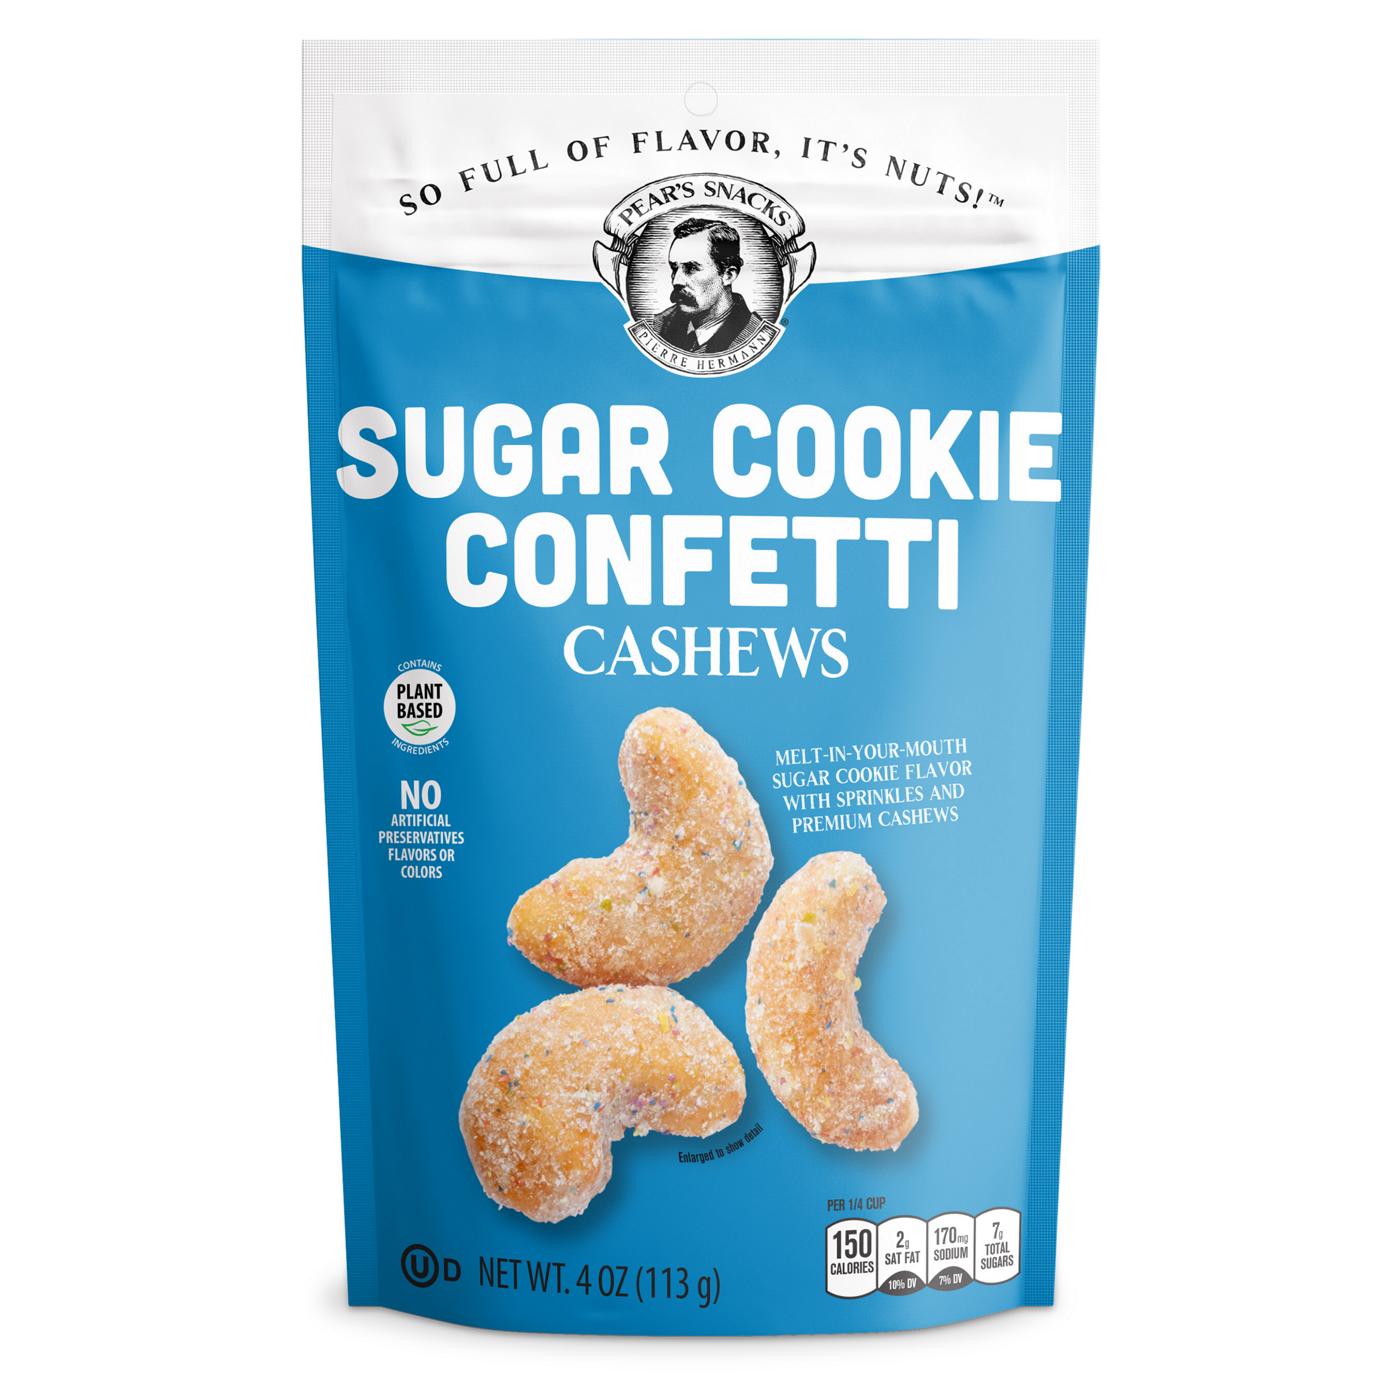 Pear's Snacks Sugar Cookie Confetti Cashews; image 1 of 3